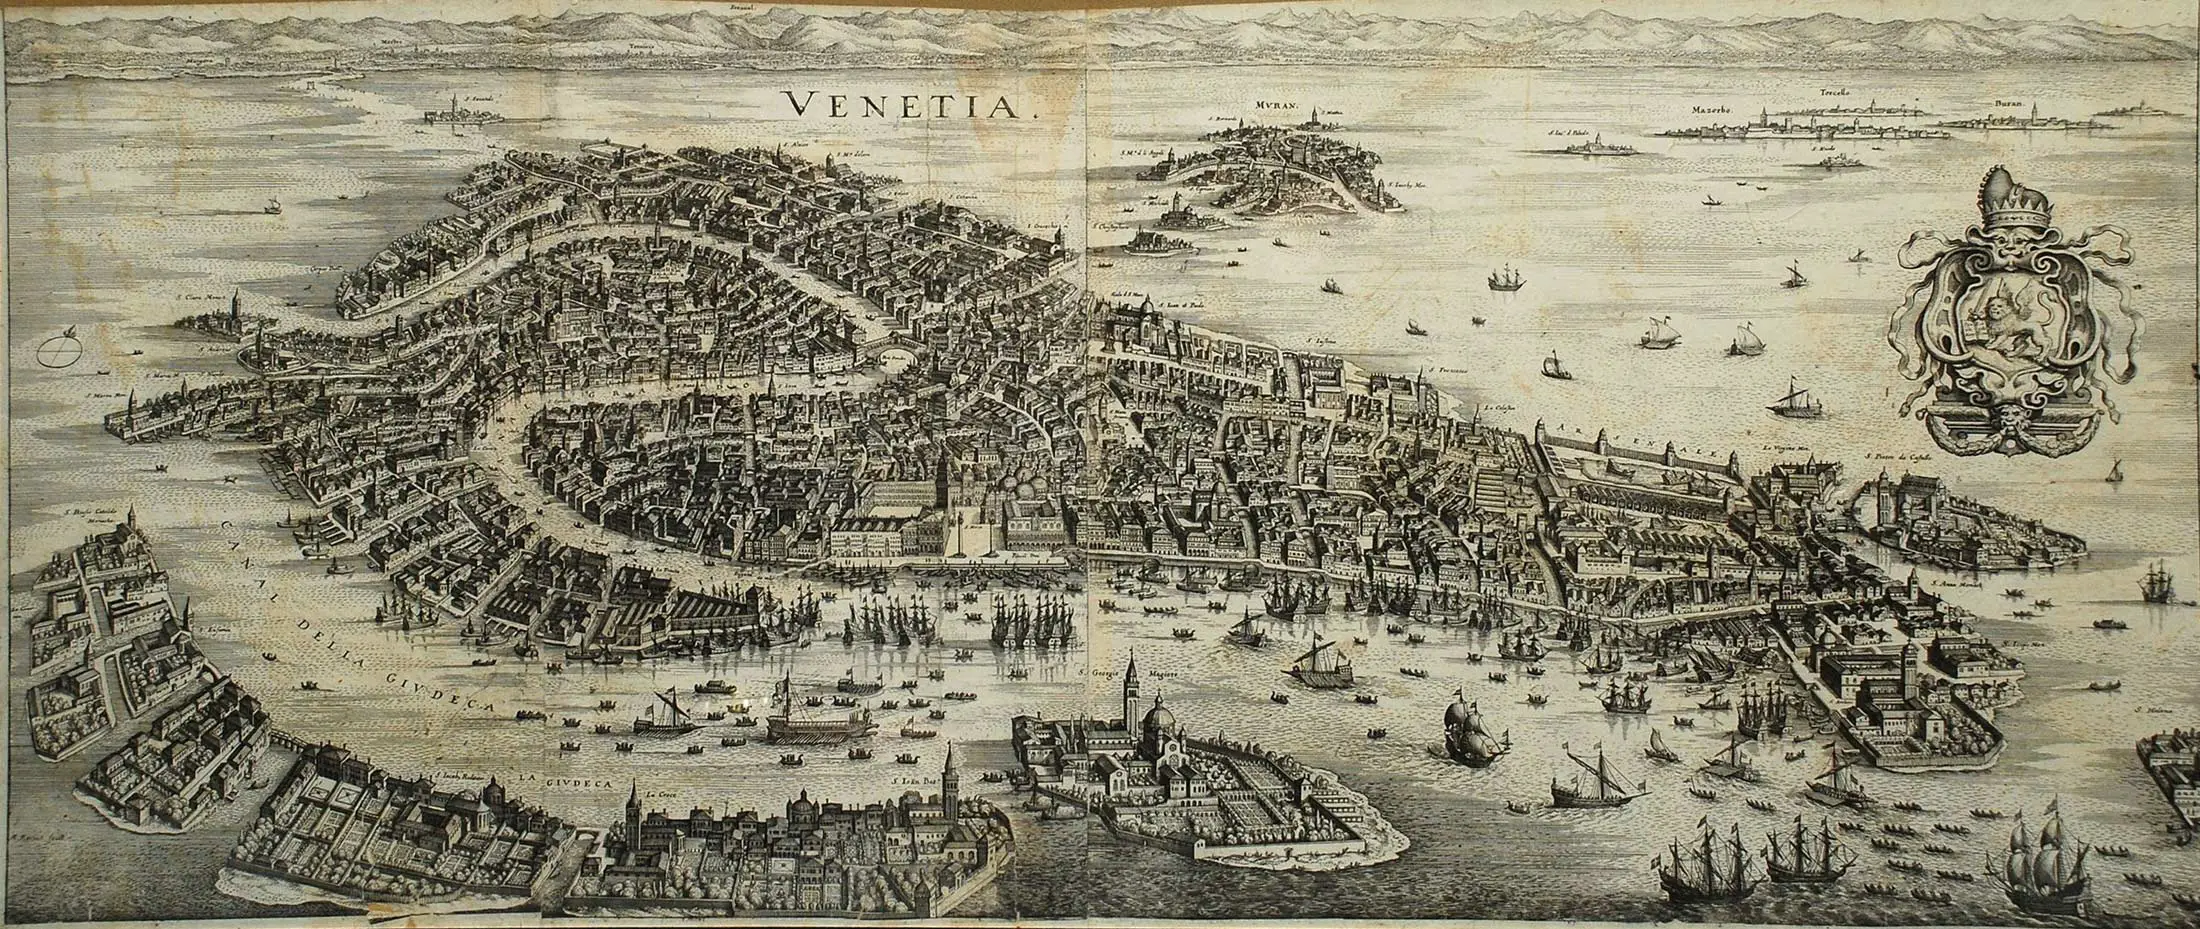 Venice (venezia) Historical Map 1